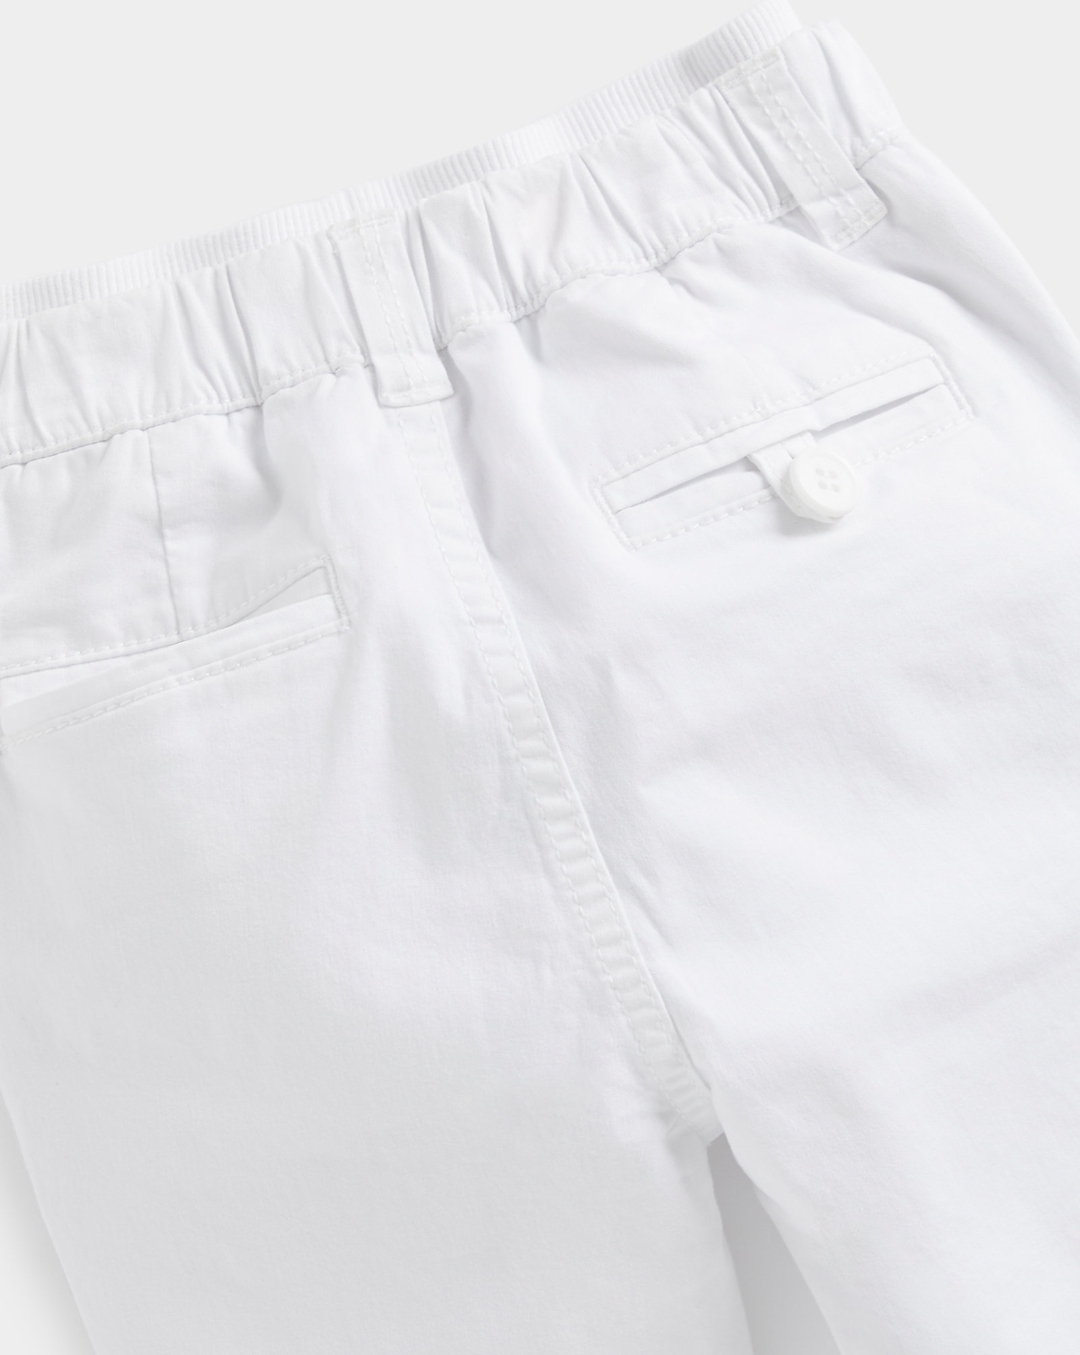 Casual Pants for Men - Khaki Pants & Chino Pants | Southern Tide